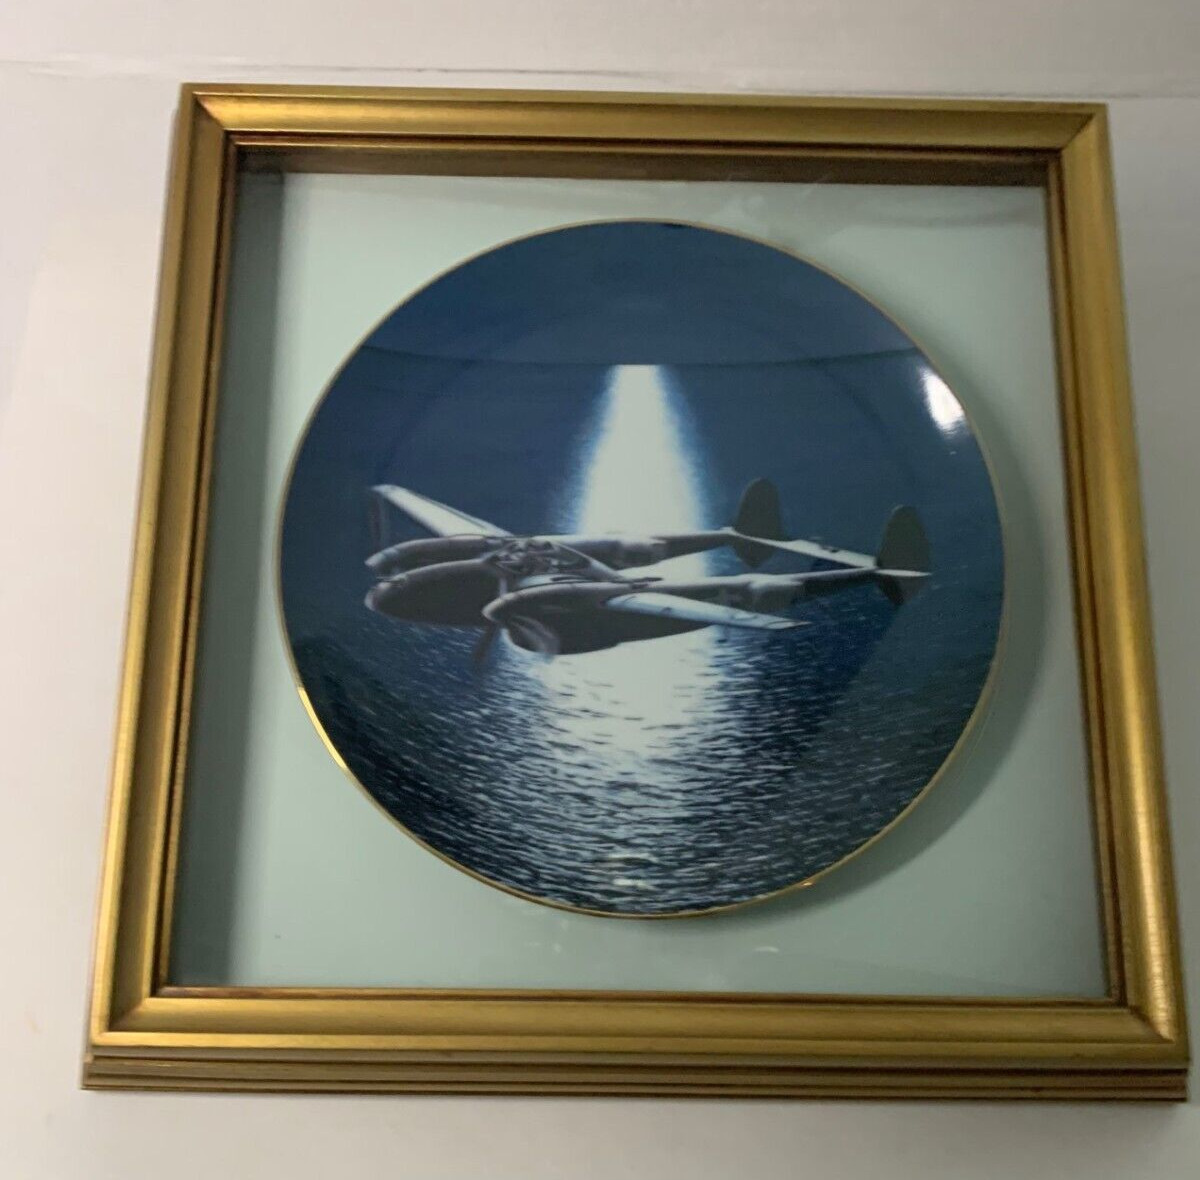 P-38 Lightning Plate in Frame, Artist Ross Tylor, Goldcrown Ceramics / No. Plate